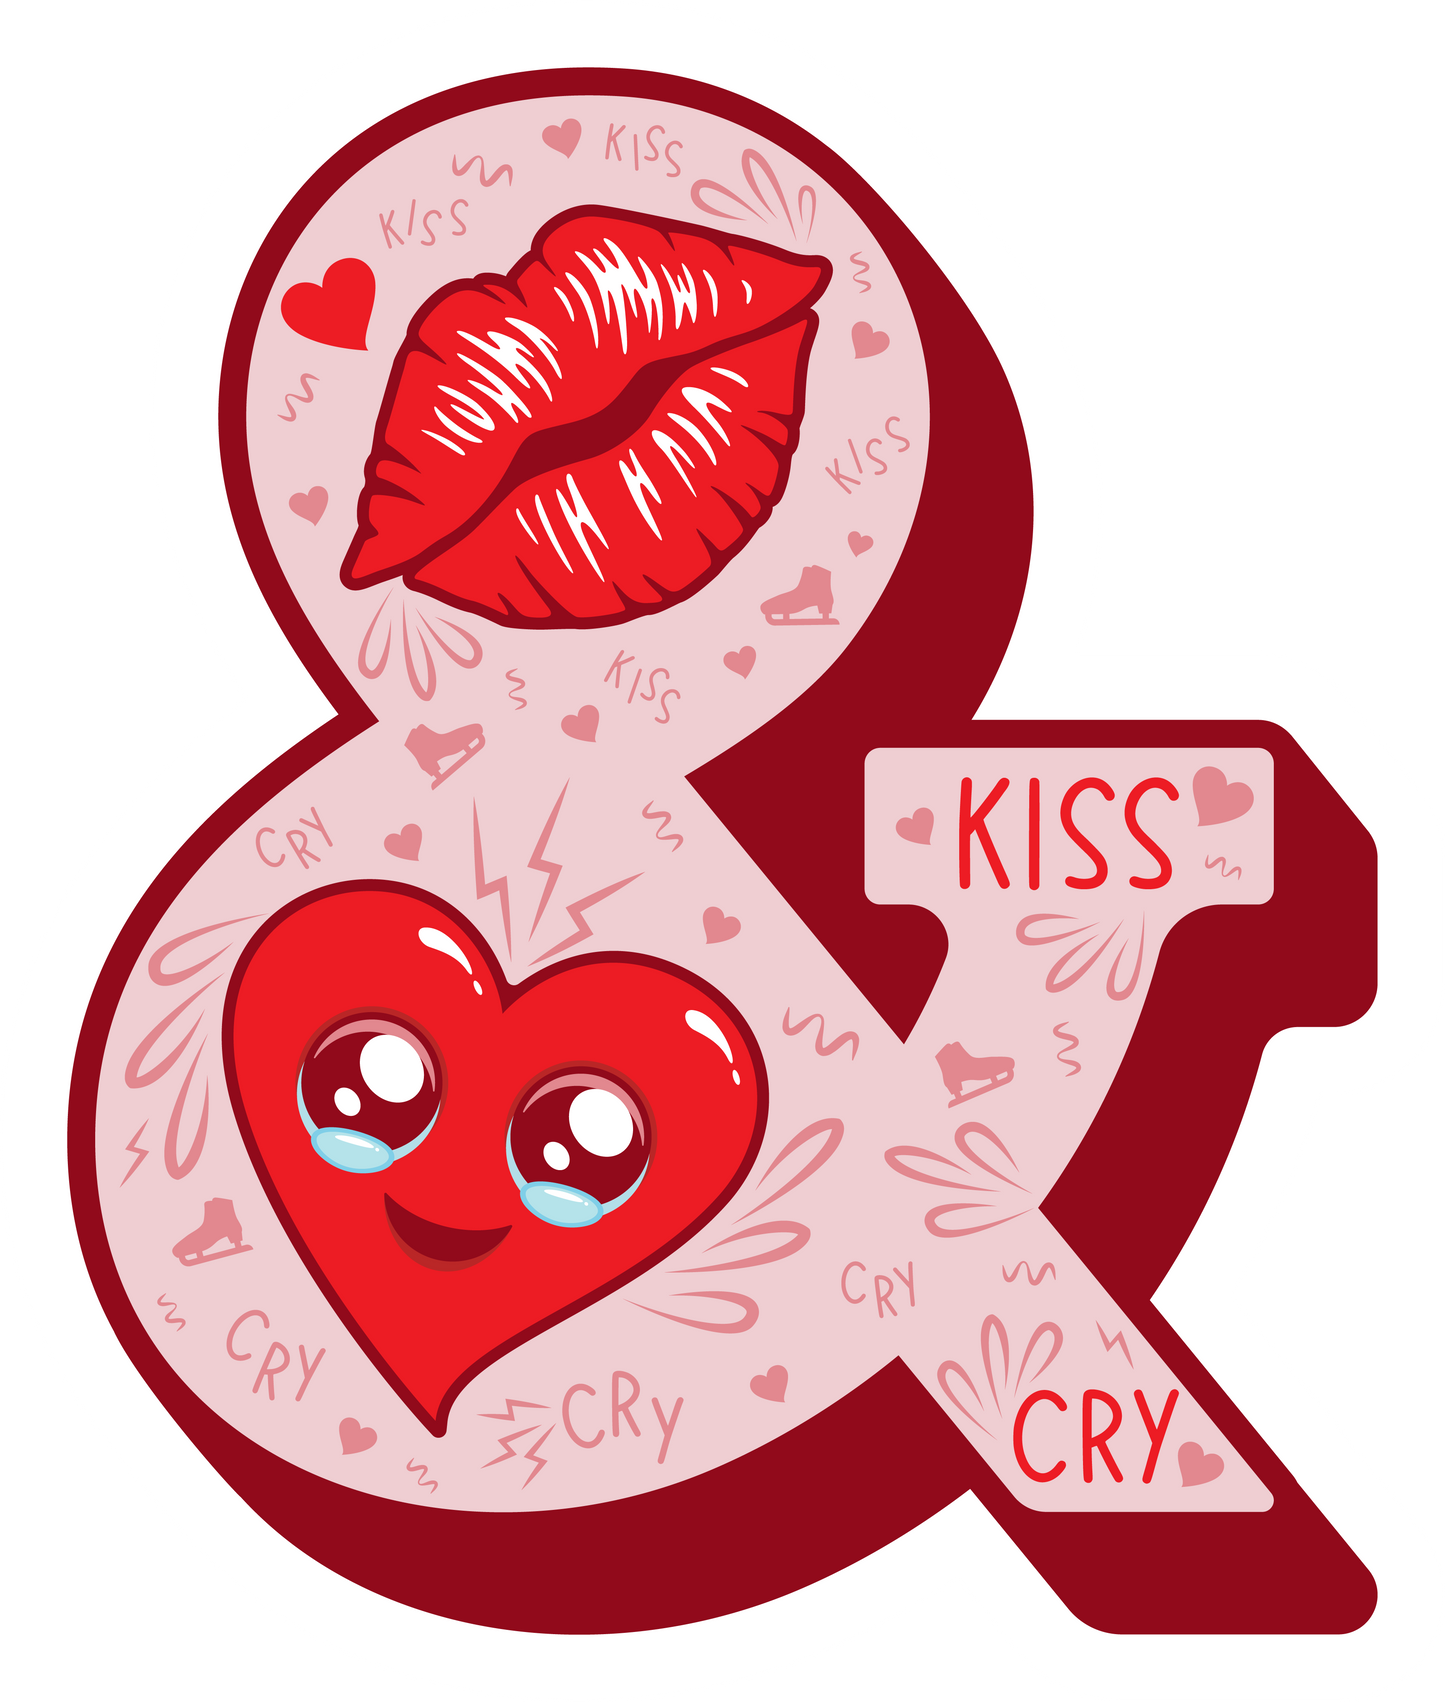 Kiss & Cry Figure Skating Sticker, 2.6" x 3"